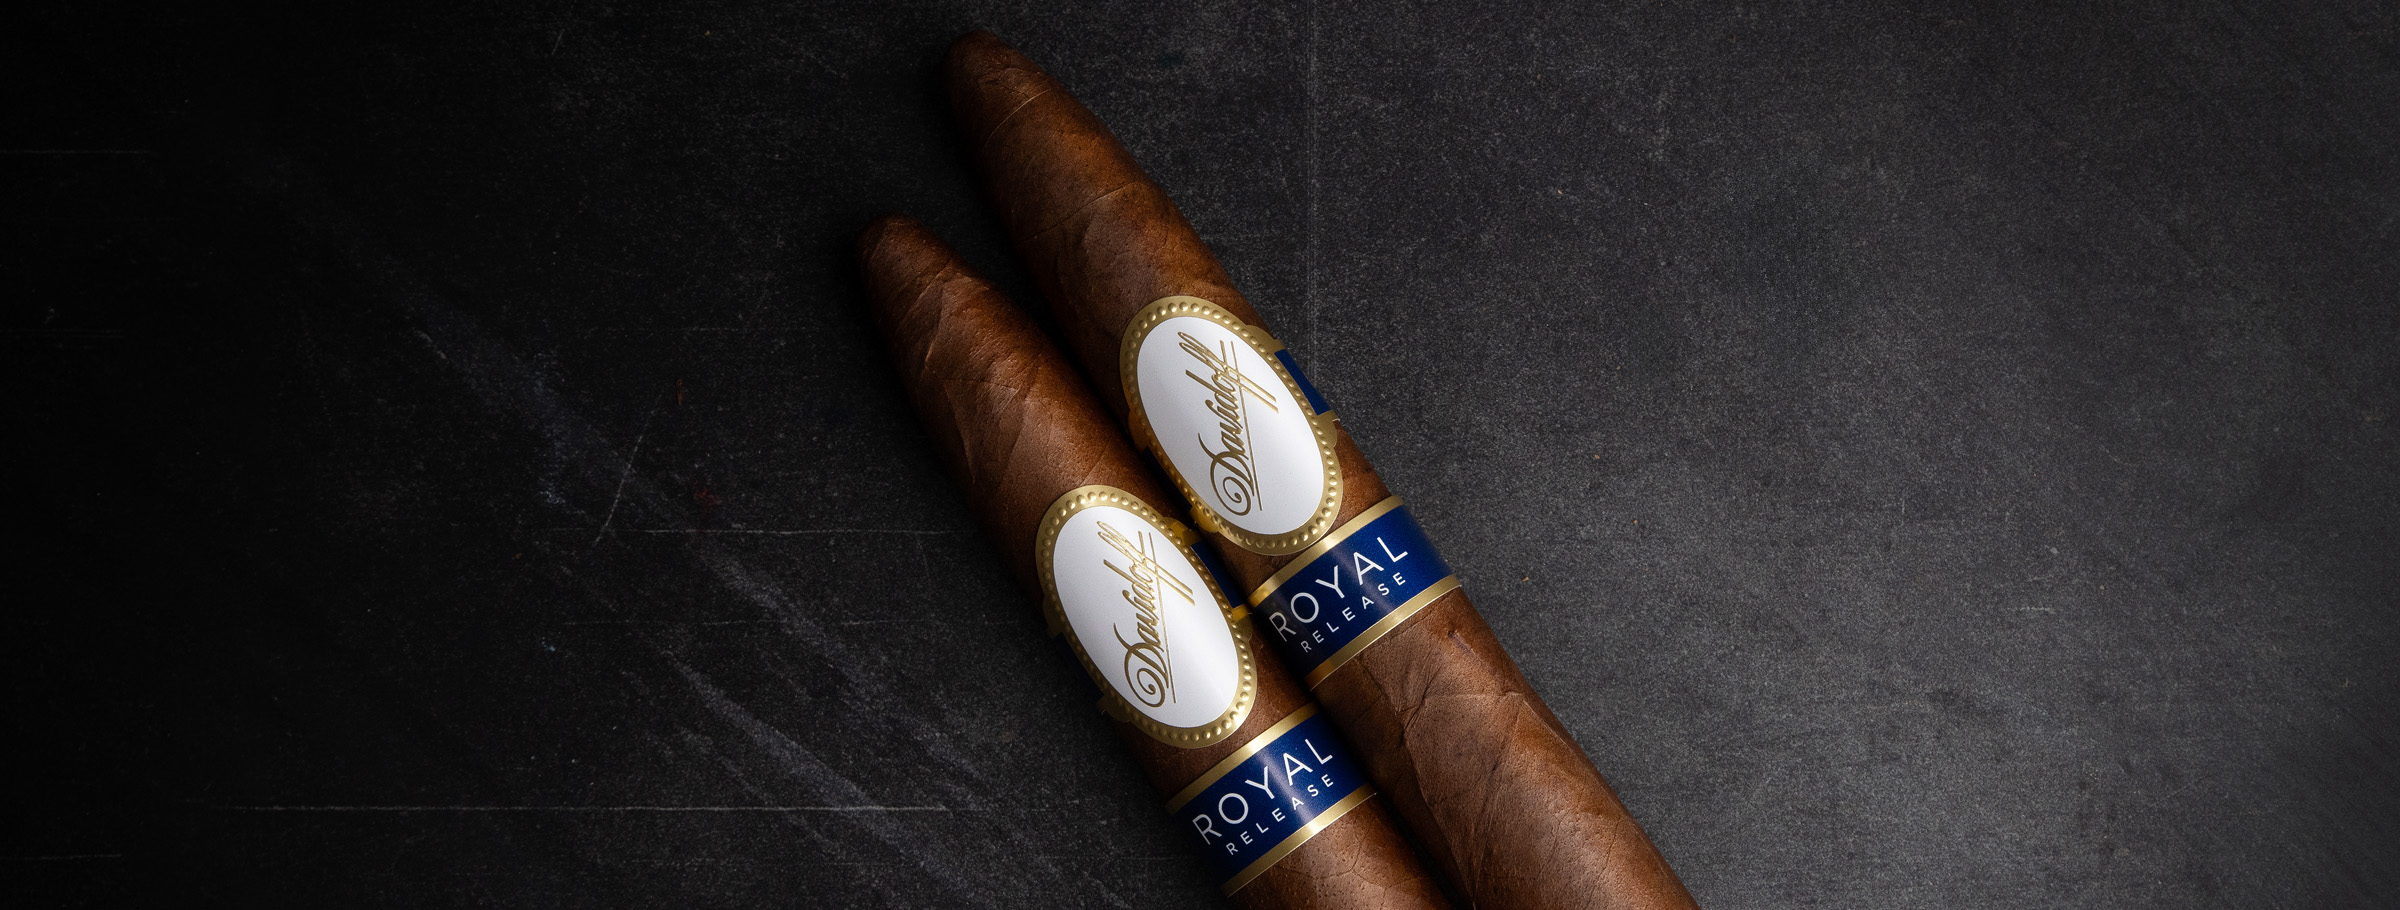 Davidoff-royal-release-robusto-cigar